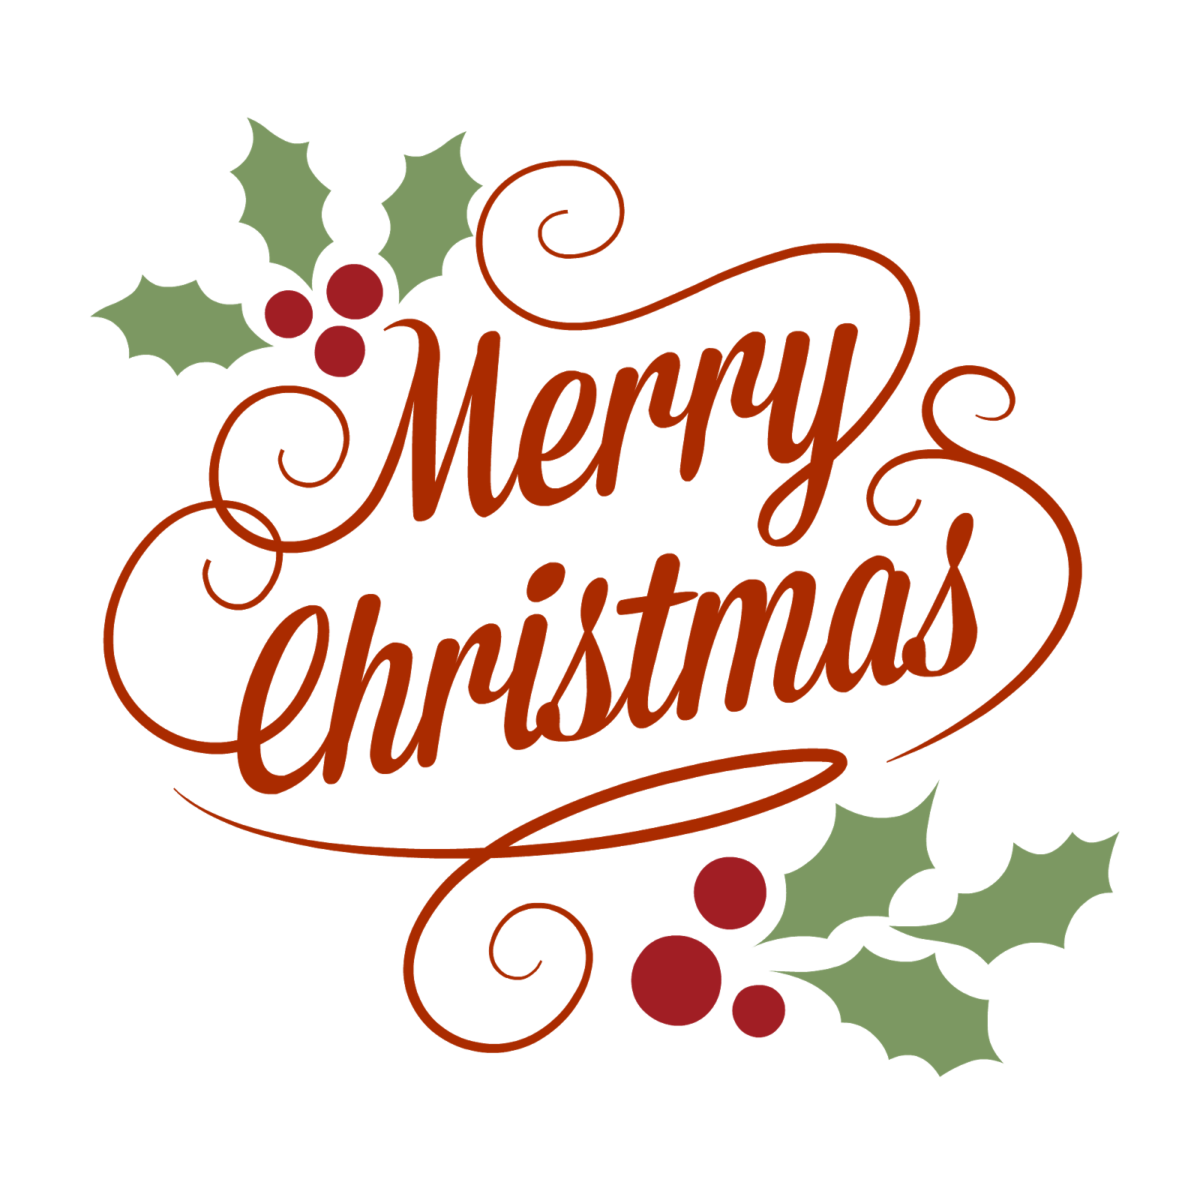 Buon Natale - Merry Christmas from Antonio IU8CRI